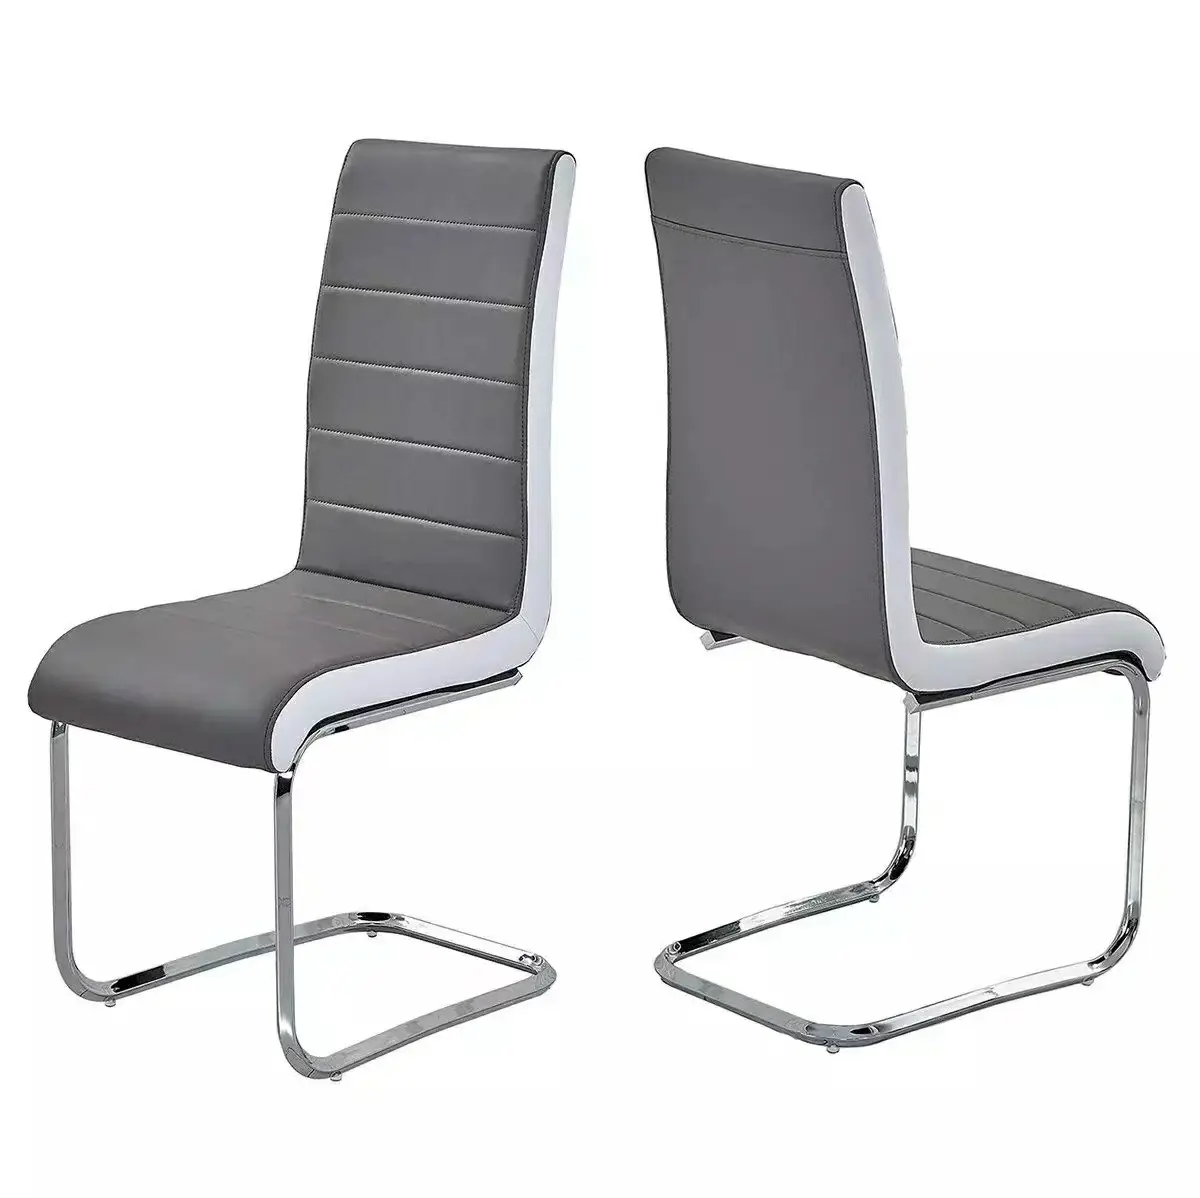 Free sample modern room luxury dining chair metal frame iron legs Chrome Modern indoor furniture PU dining chair .